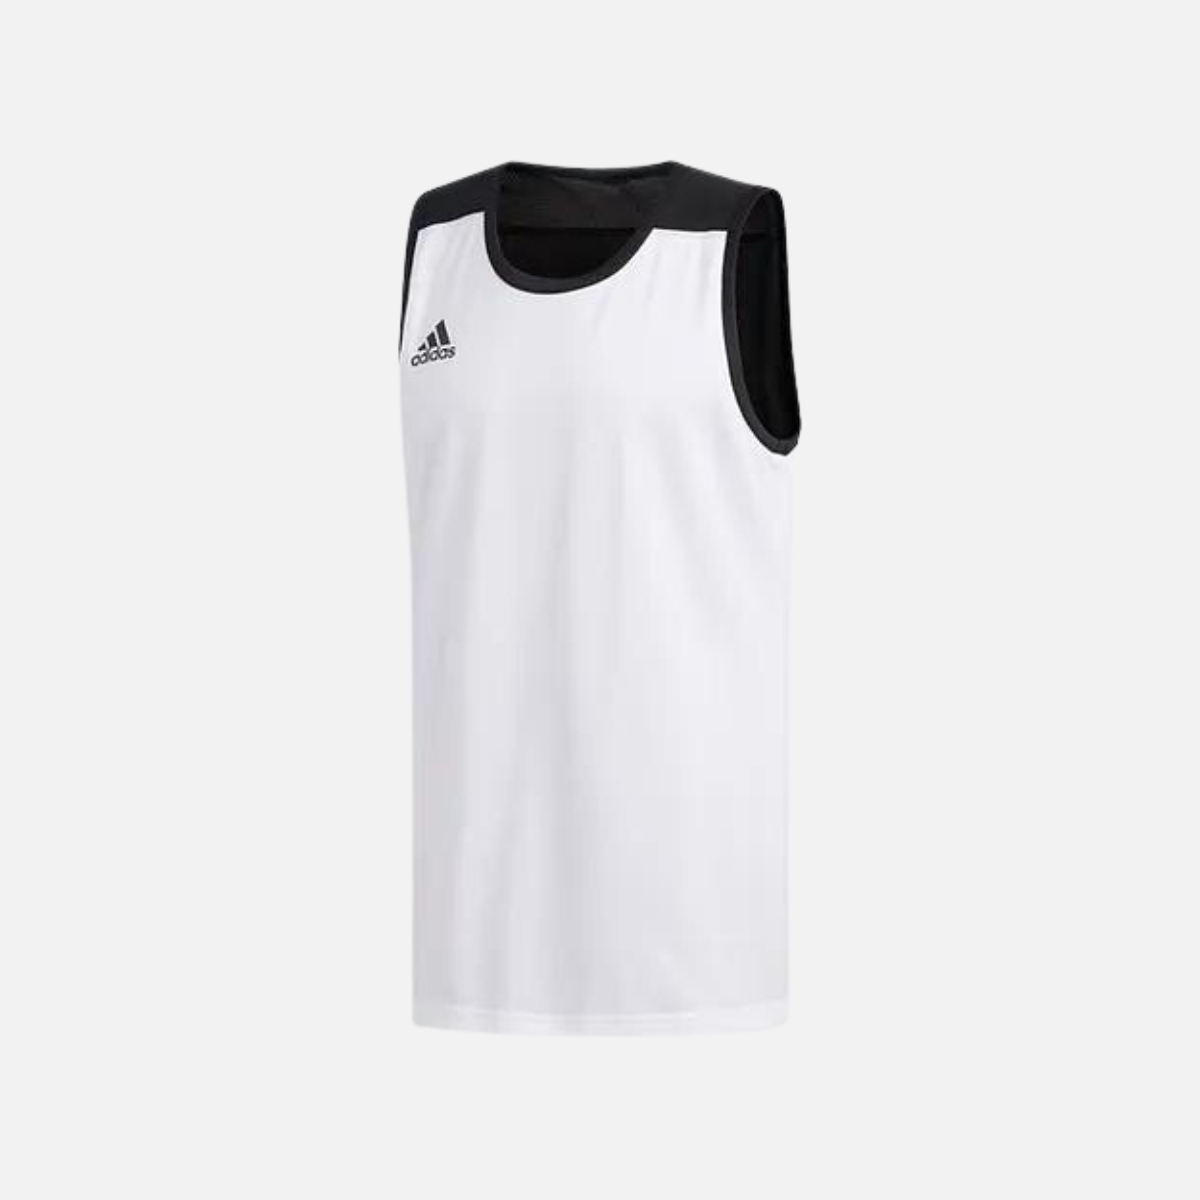 Adidas 3G Speed Reversable Men's Basketball Jersey -Black/White